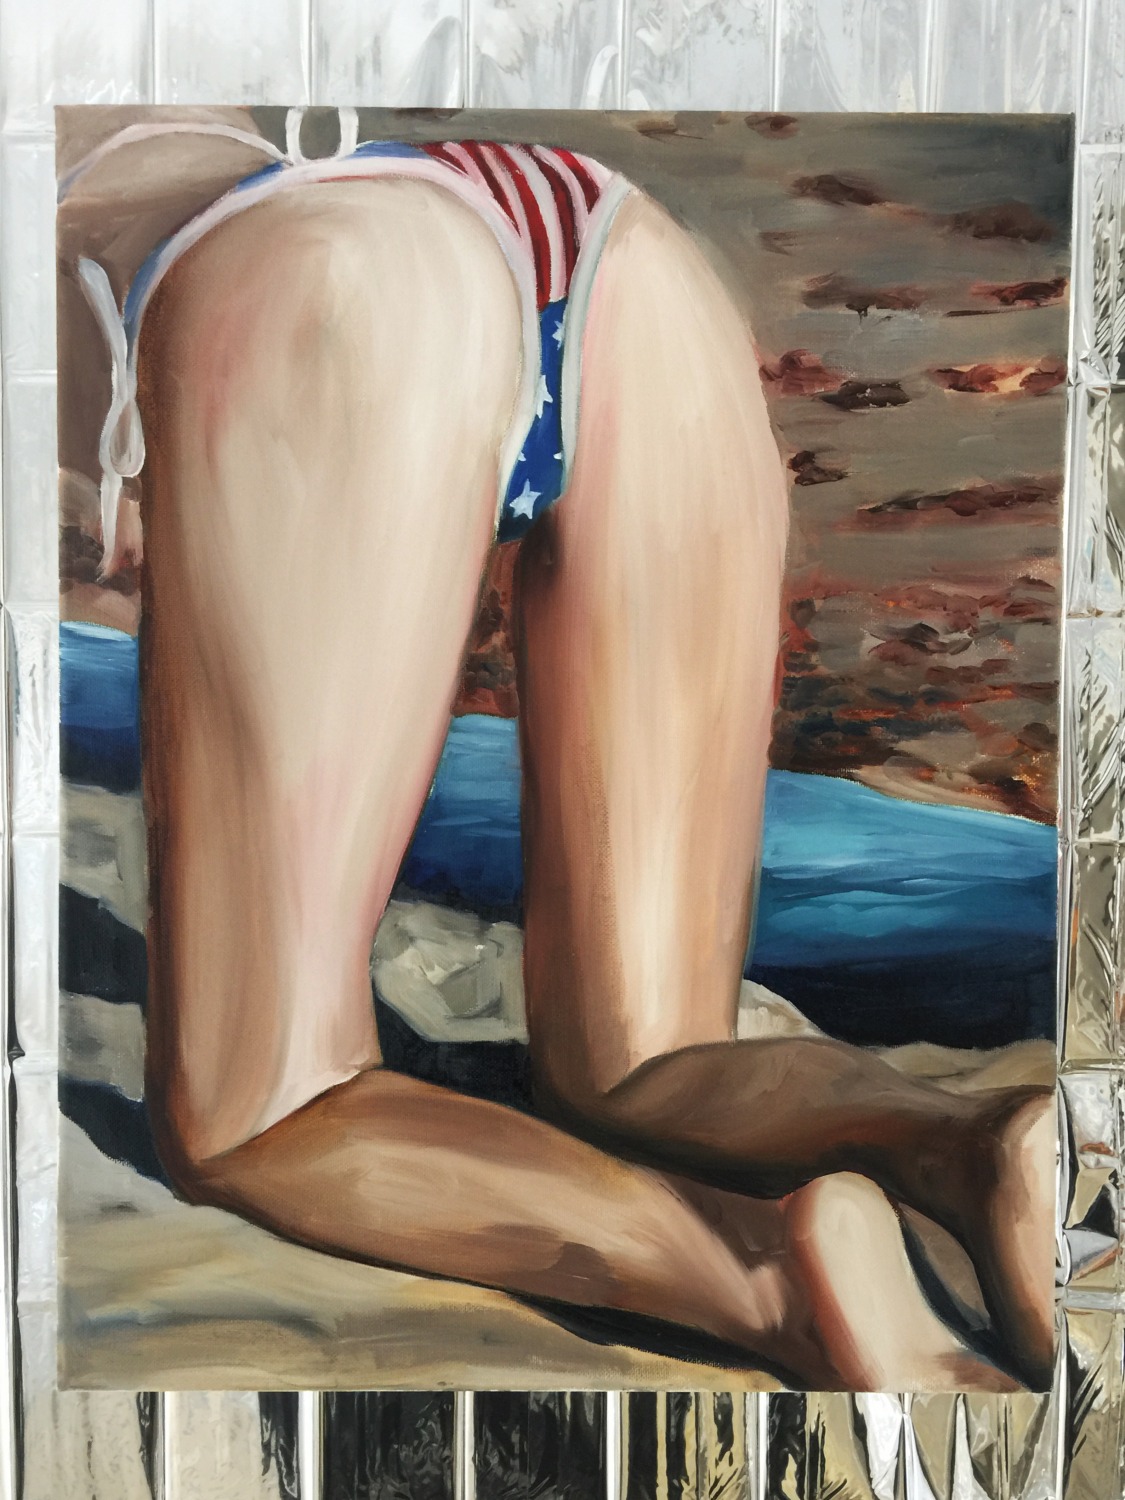 american flag bikini